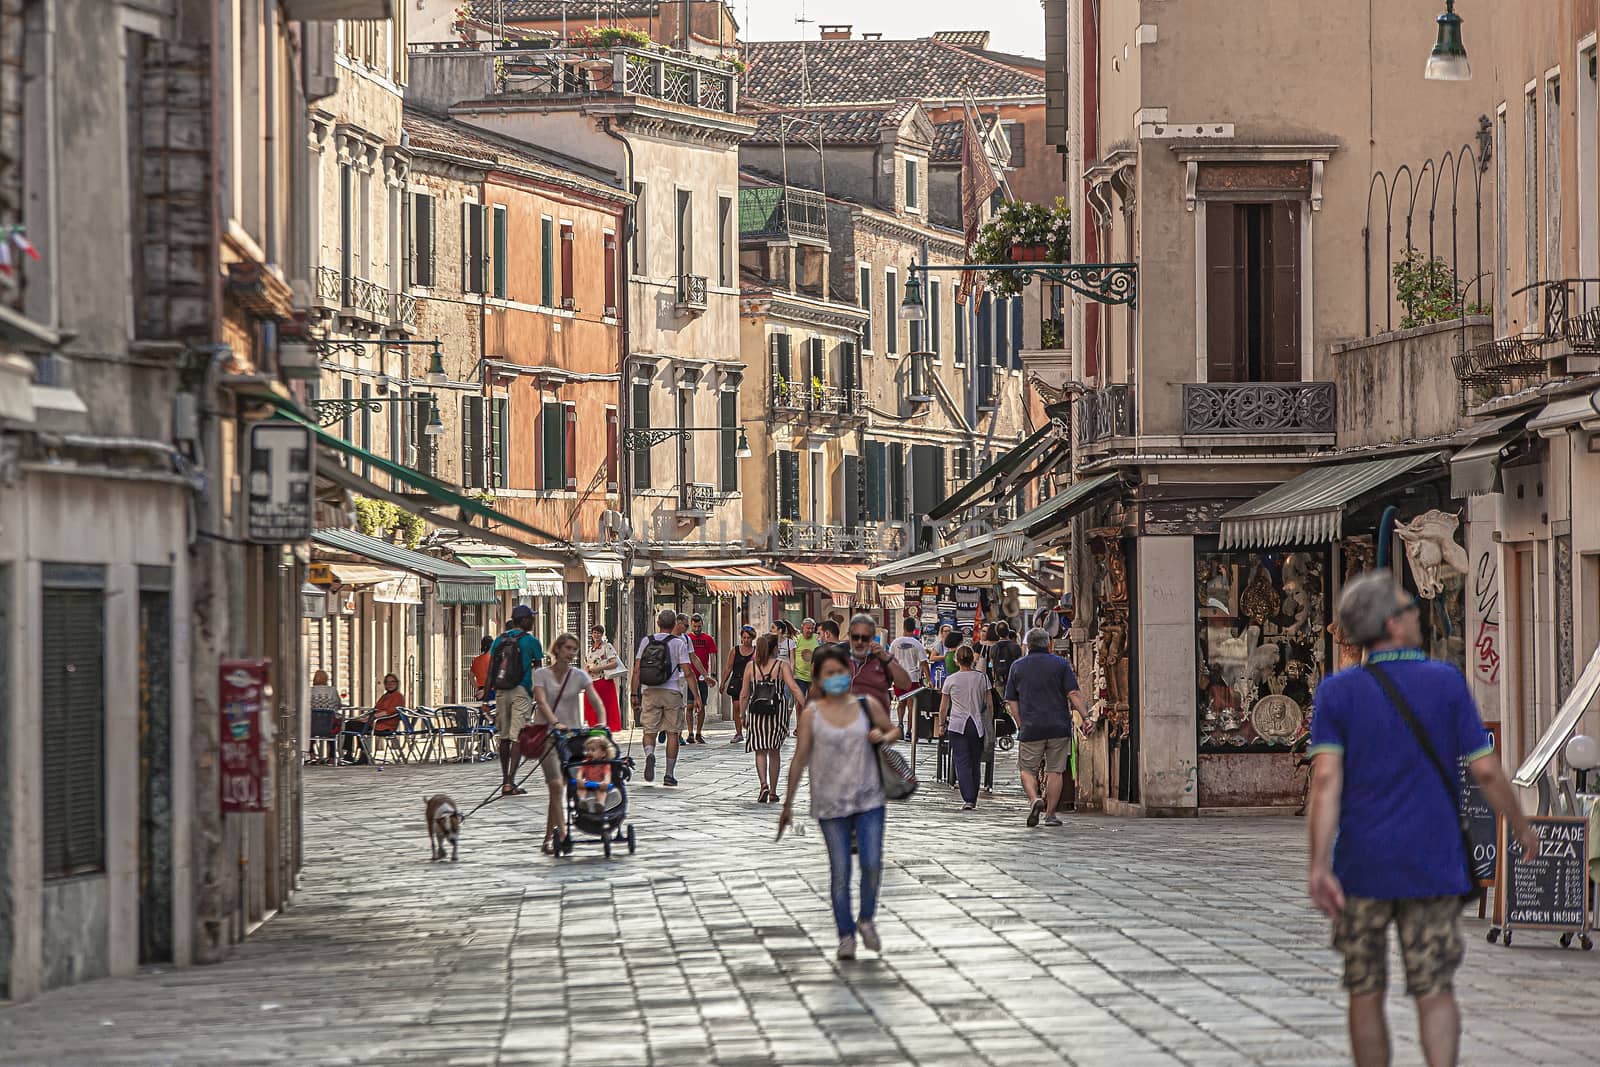 Tourists walk in Venice street 17 by pippocarlot